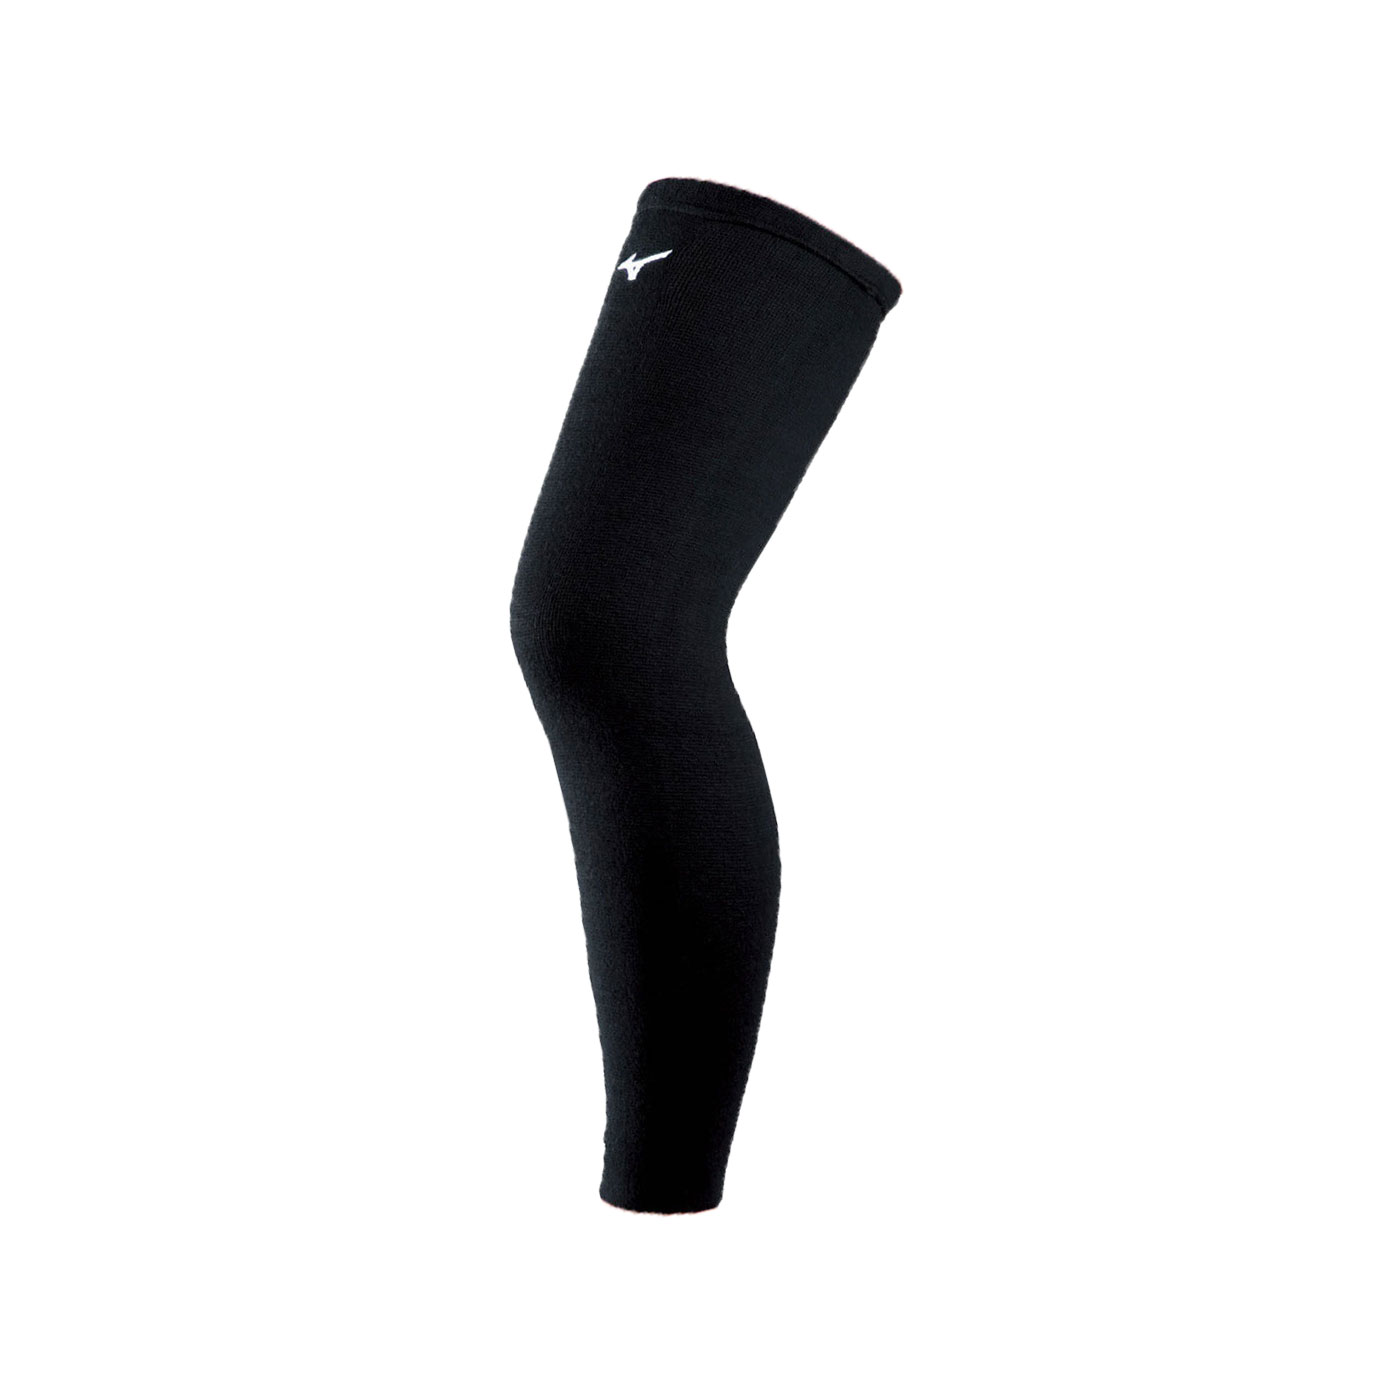 MIZUNO 薄型加長護膝(約55cm) V2MY802009 - 黑白